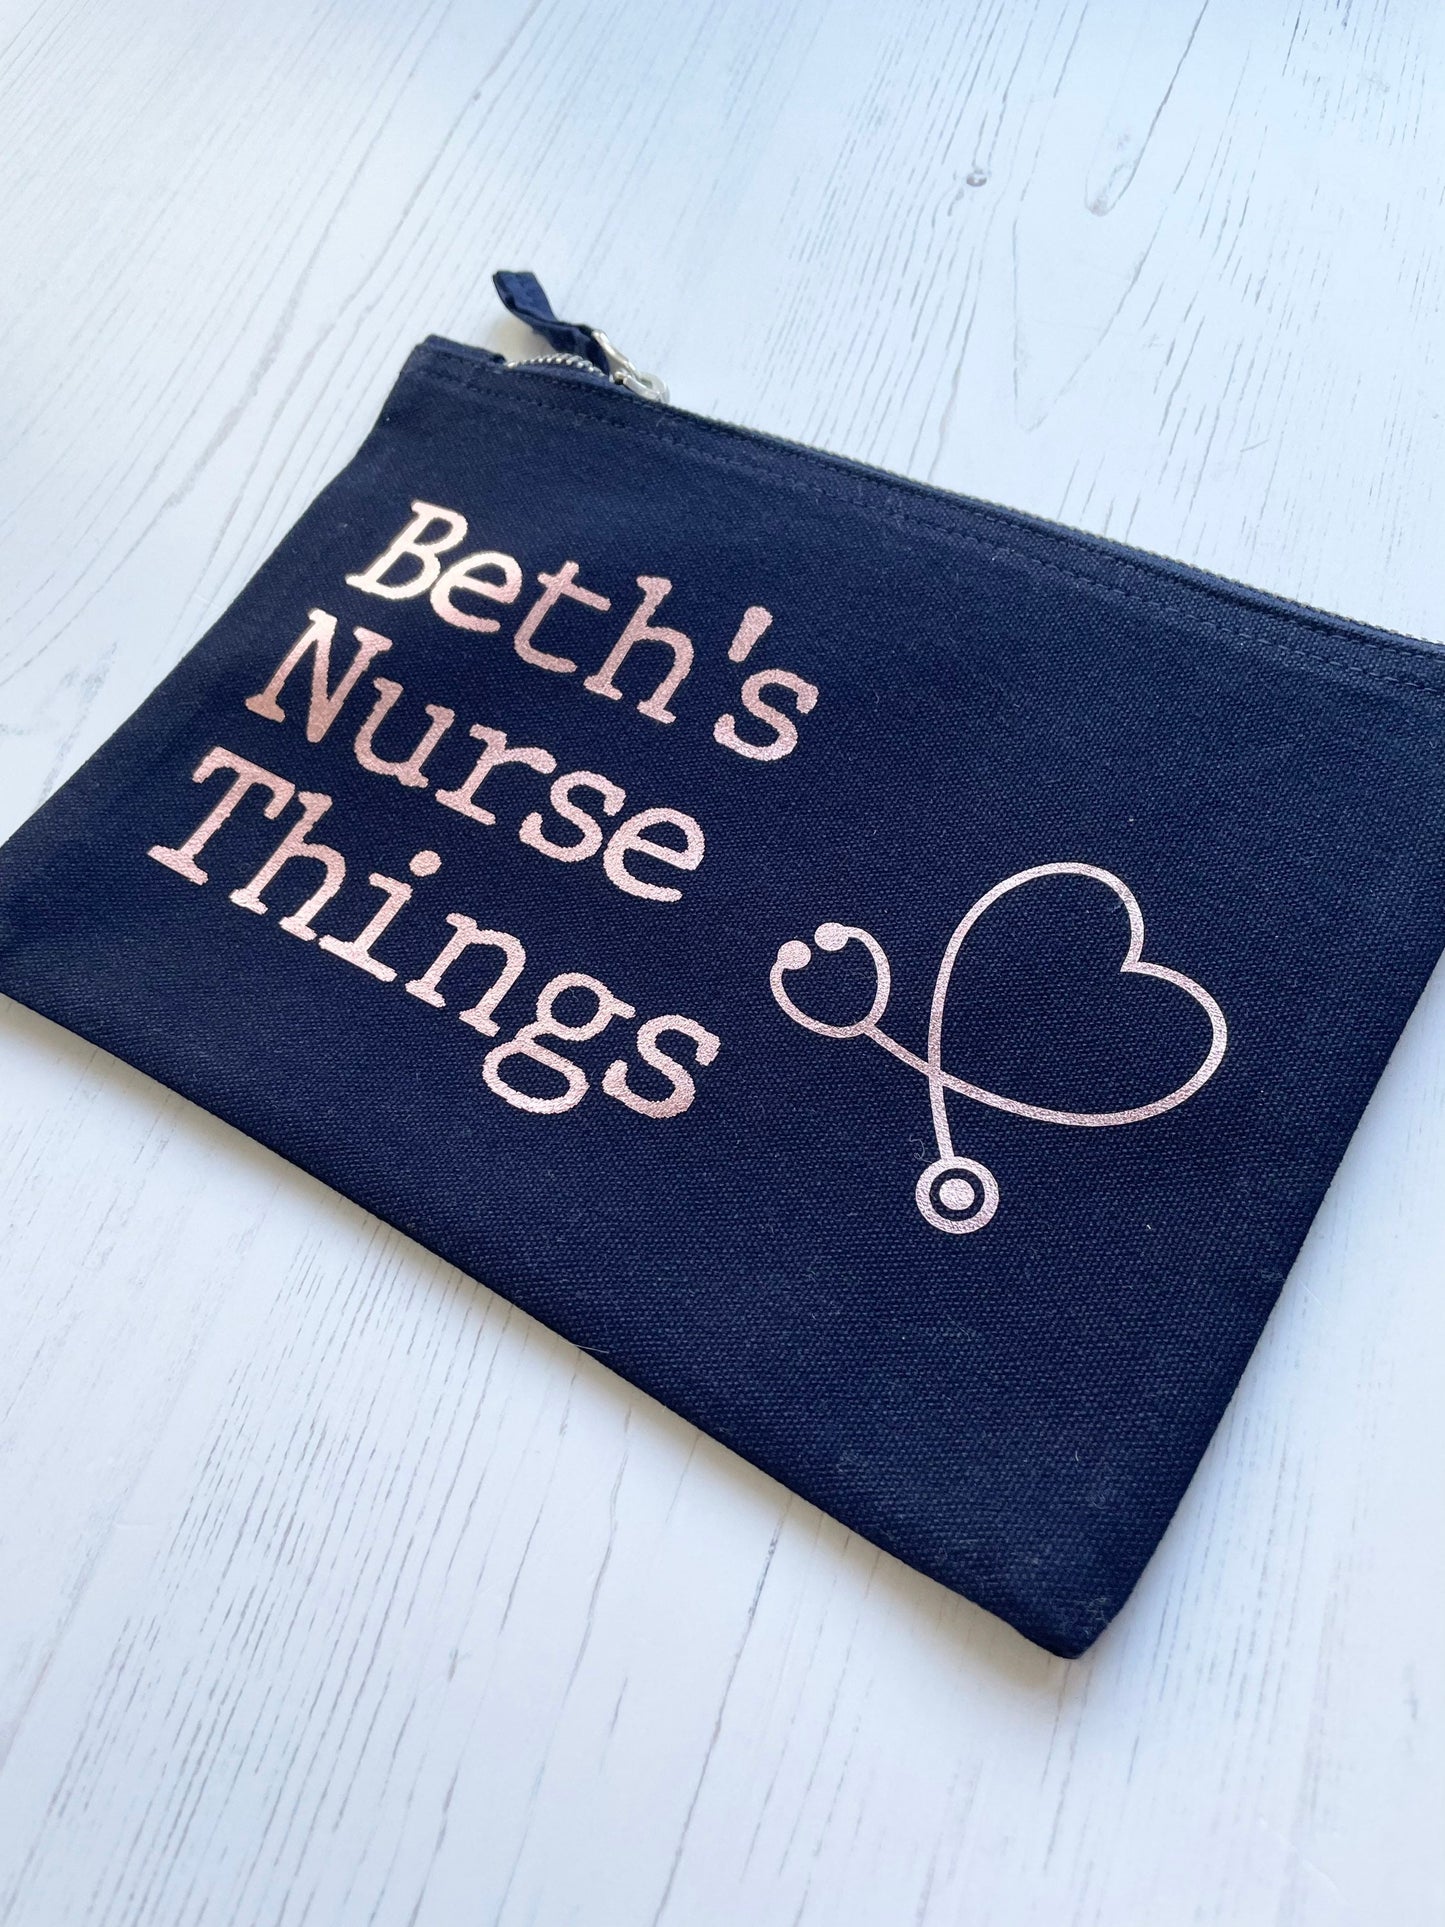 Nurse things pouch, personalised nursing graduation gift, nurse colleague present, new nurse job present